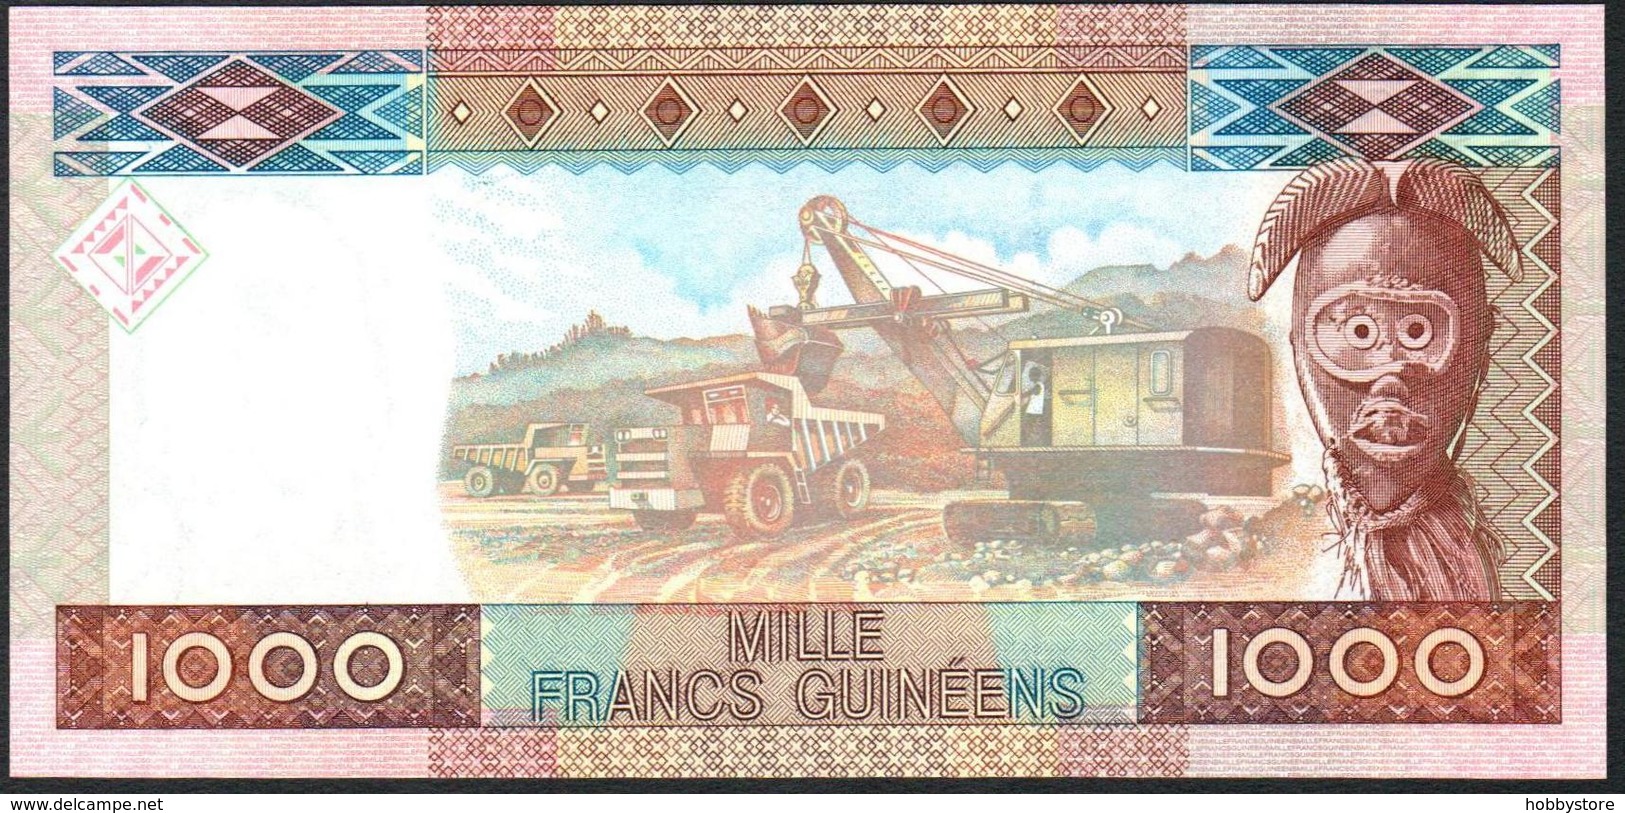 Guinea 1000 Francs 2006 UNC - Guinea